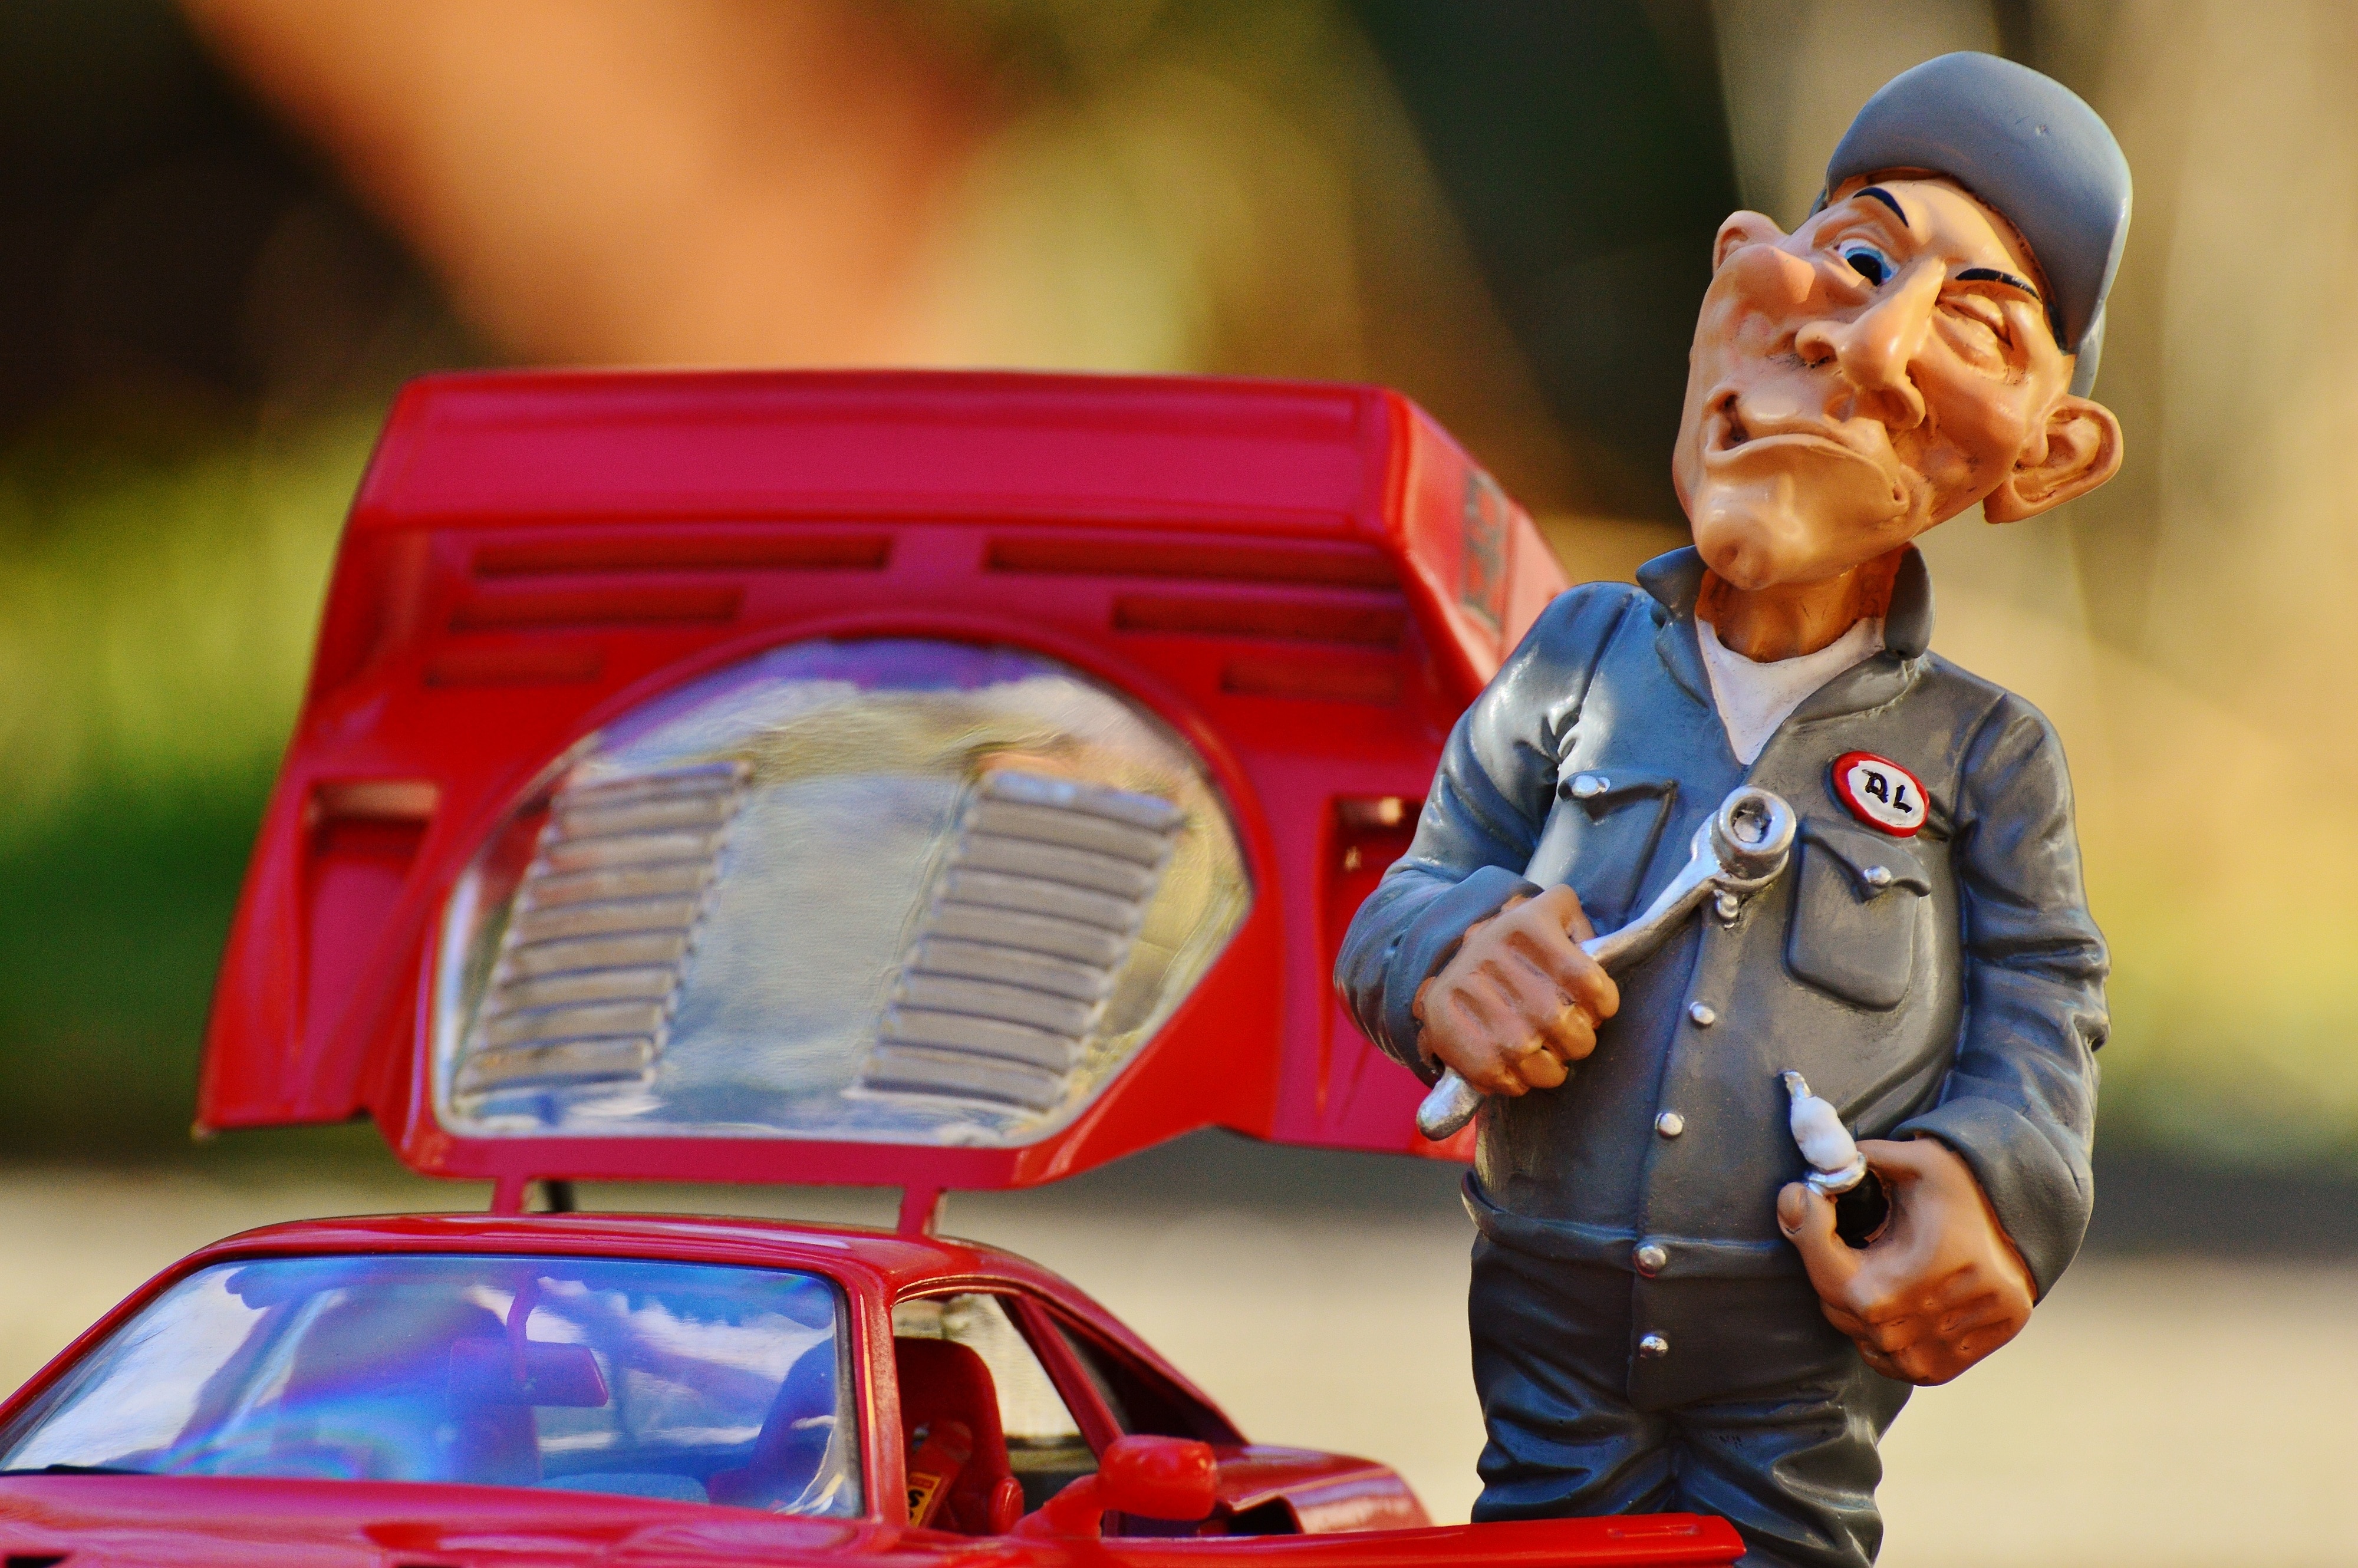 mechanic man holding tool and sports car figurine set